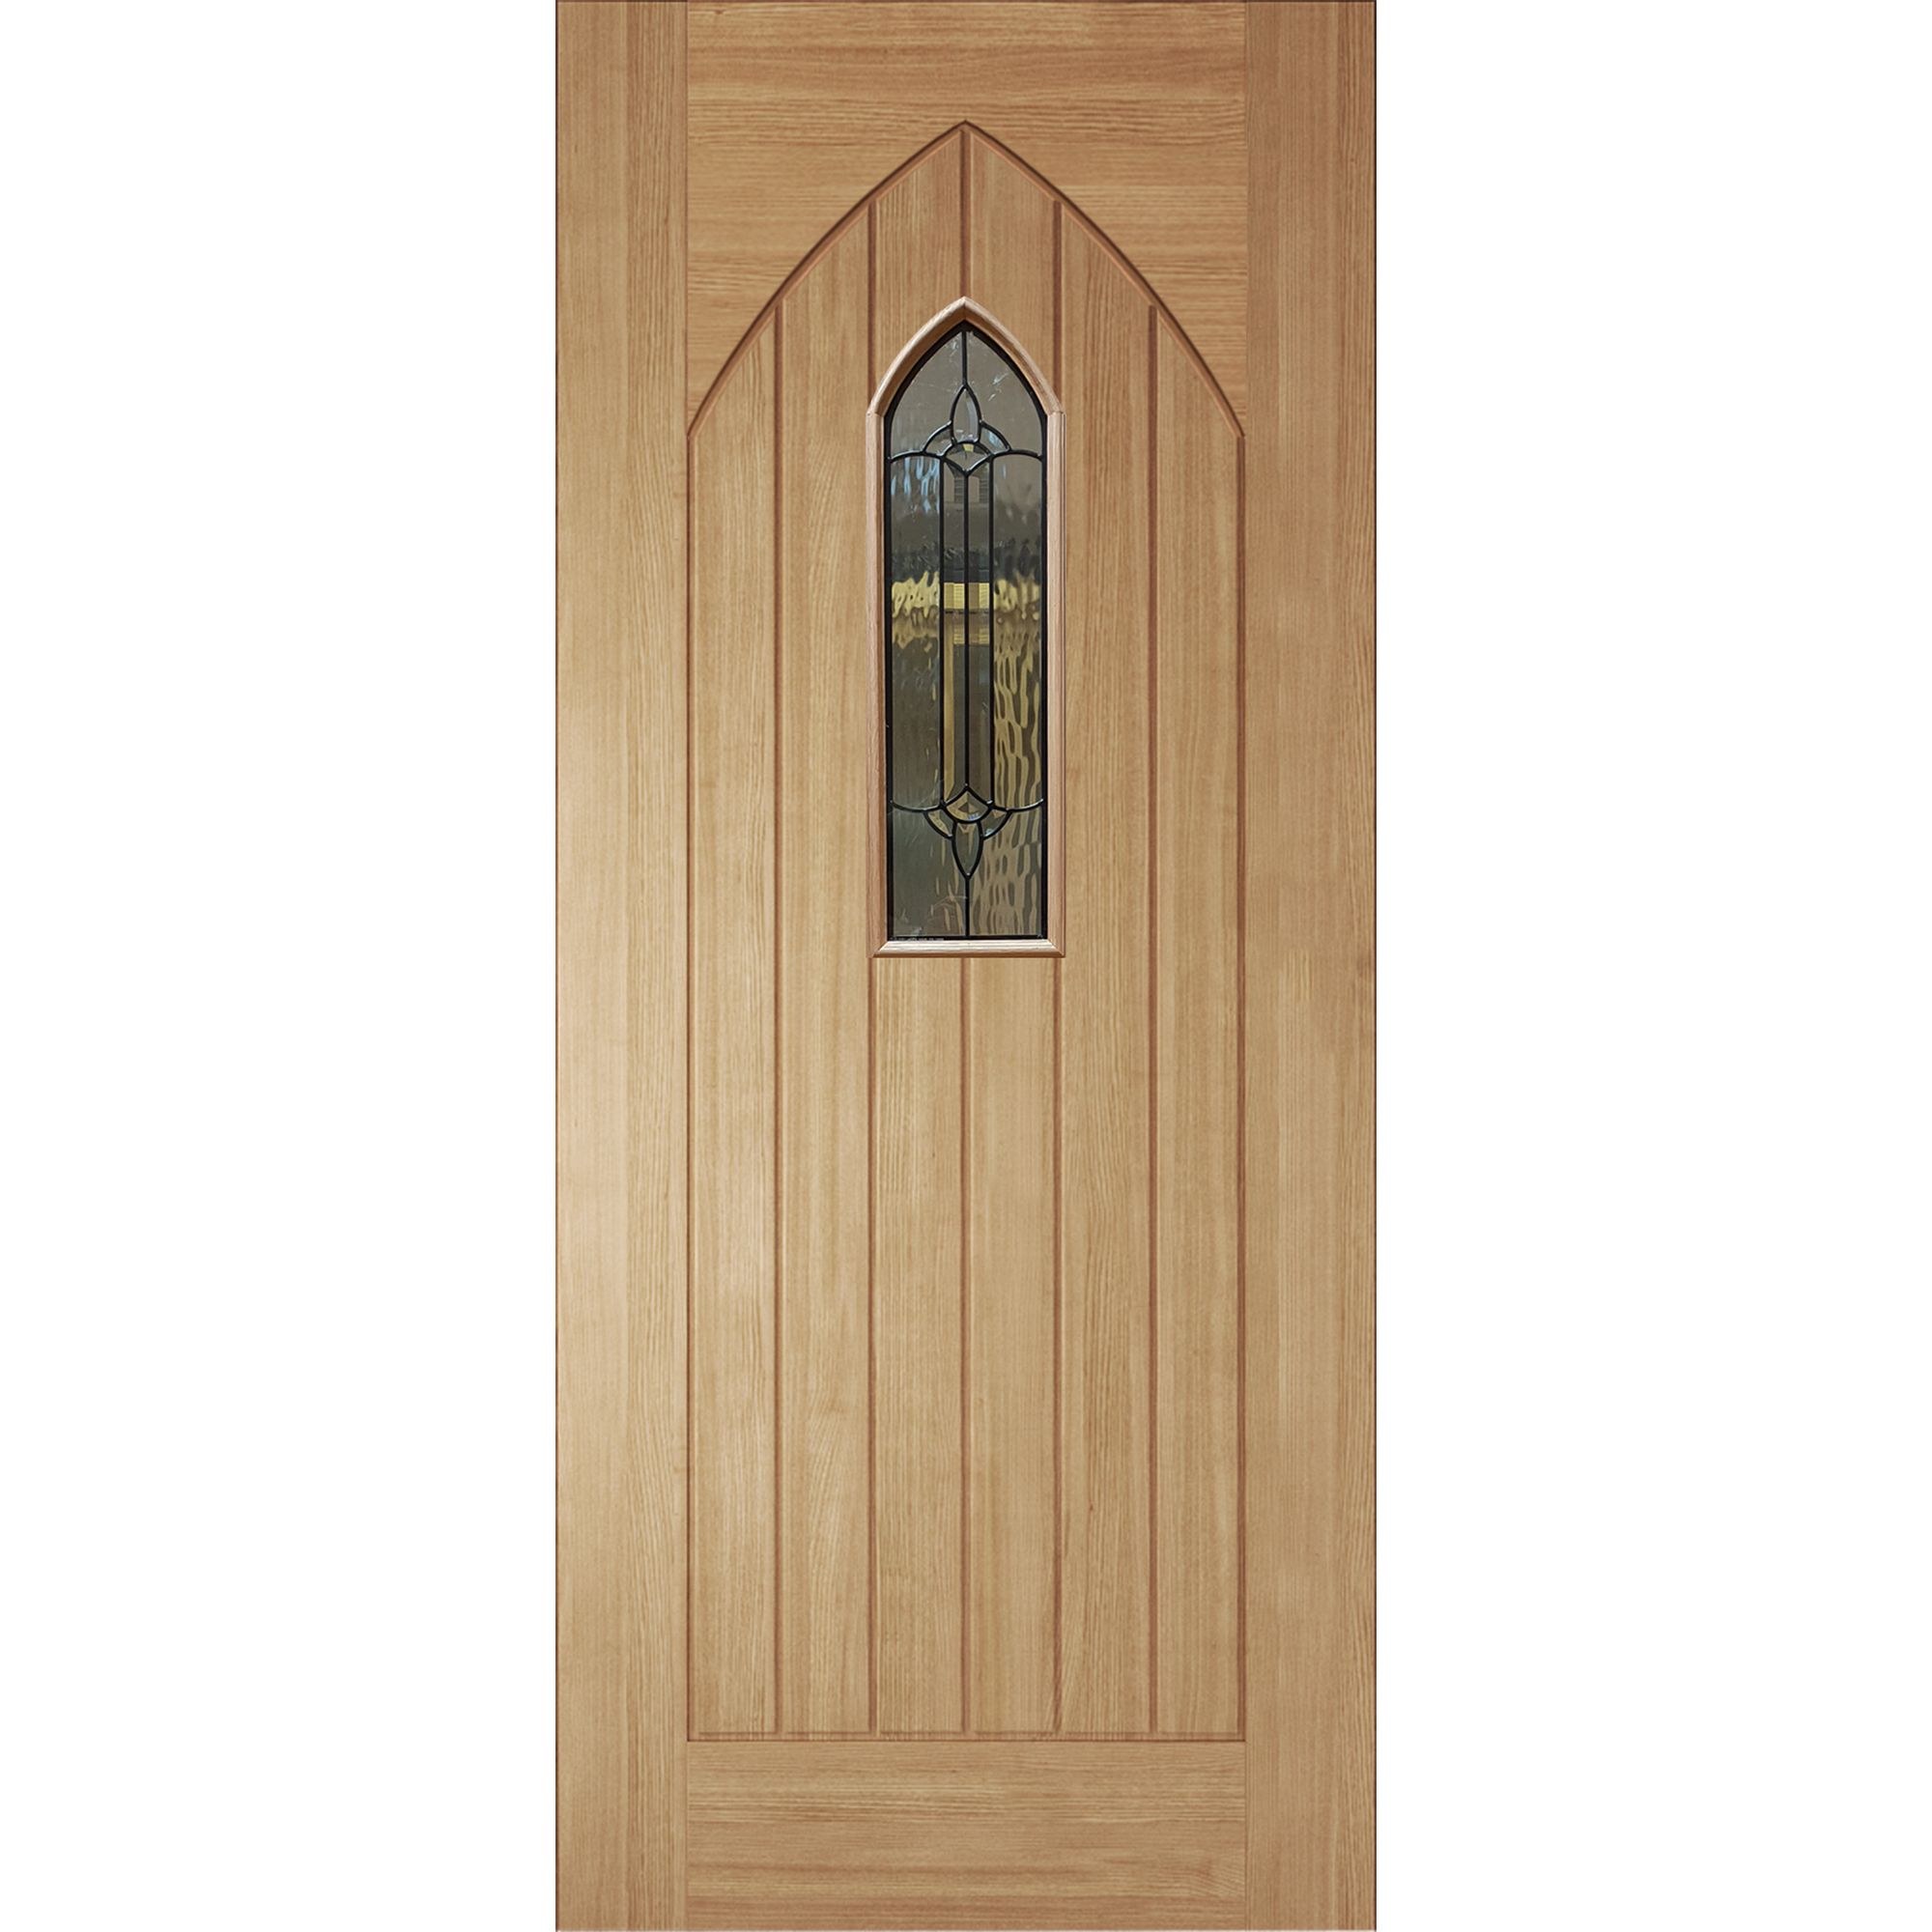 Westminster 6 panel Leaded Timber White oak veneer Swinging External Front Door, (H)1981mm (W)762mm